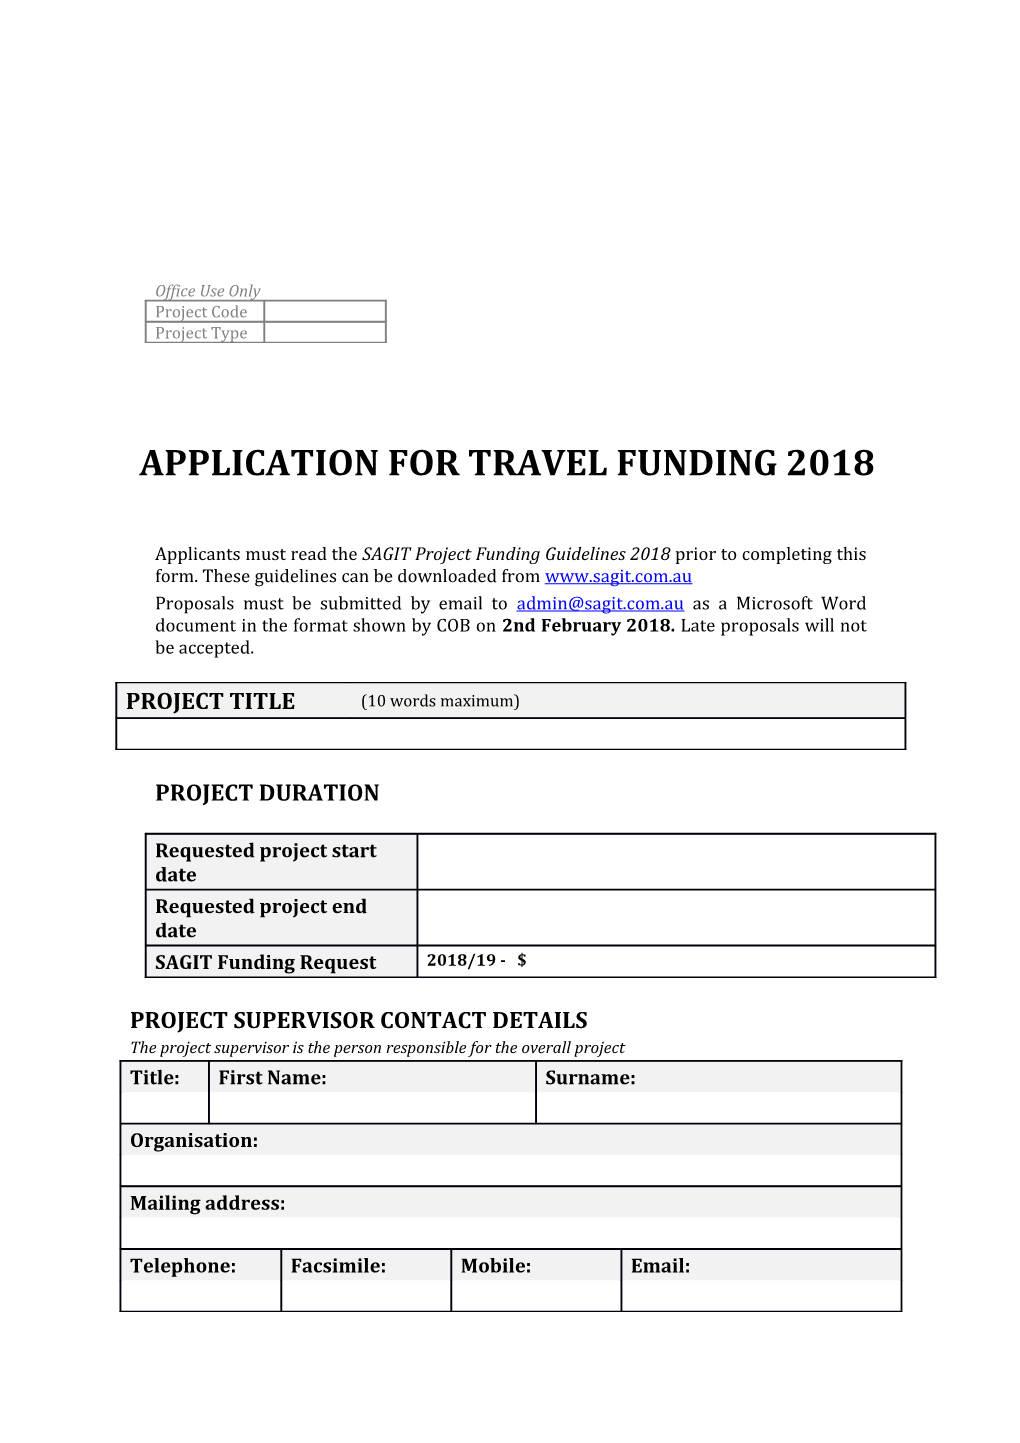 Application for Travel Funding 2018